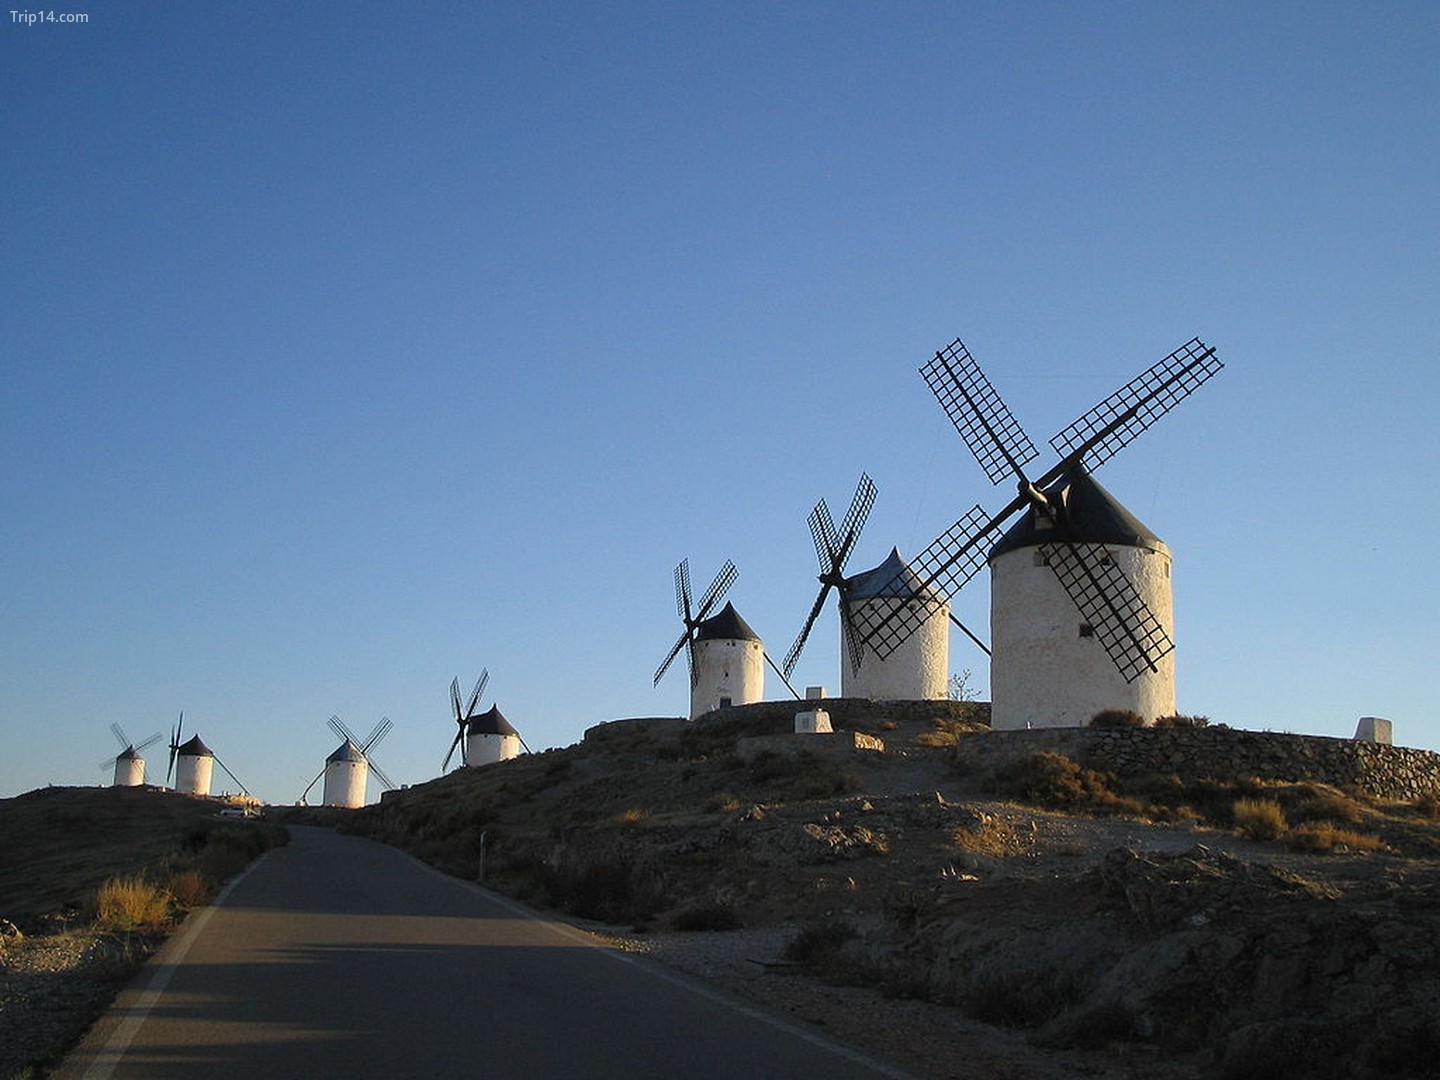  Cối xay gió ở La Mancha, Tây Ban Nha   |   